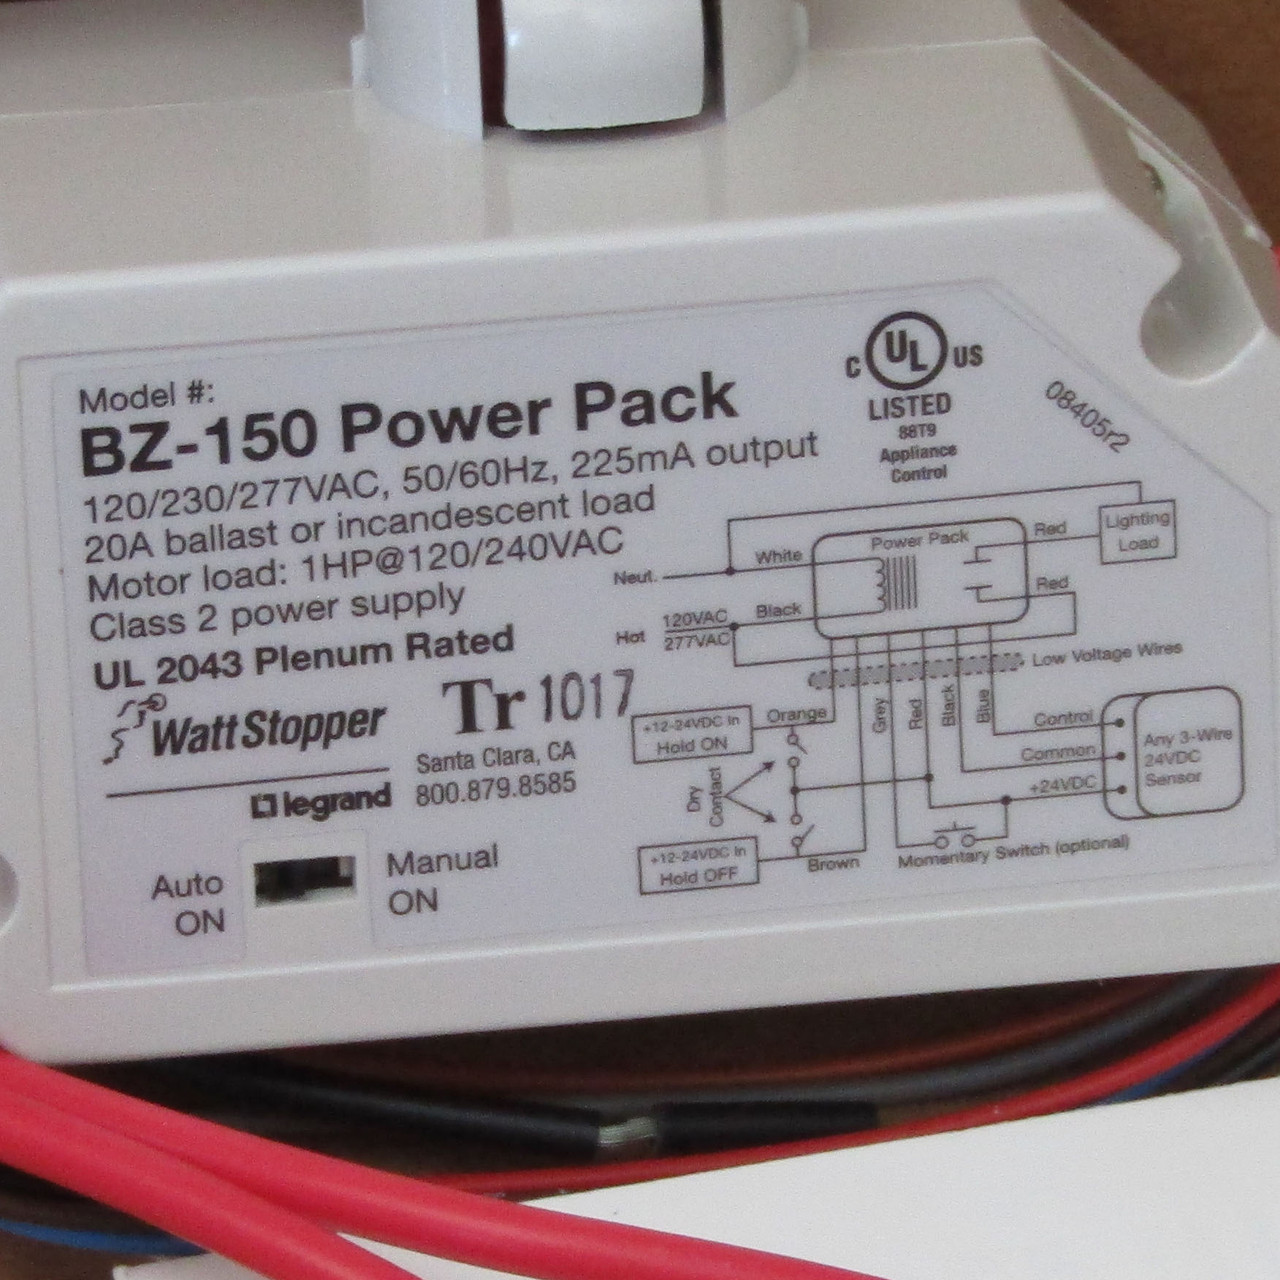 WattStopper BZ-150 Power Pack 120/230/277V, 225mA Output - New